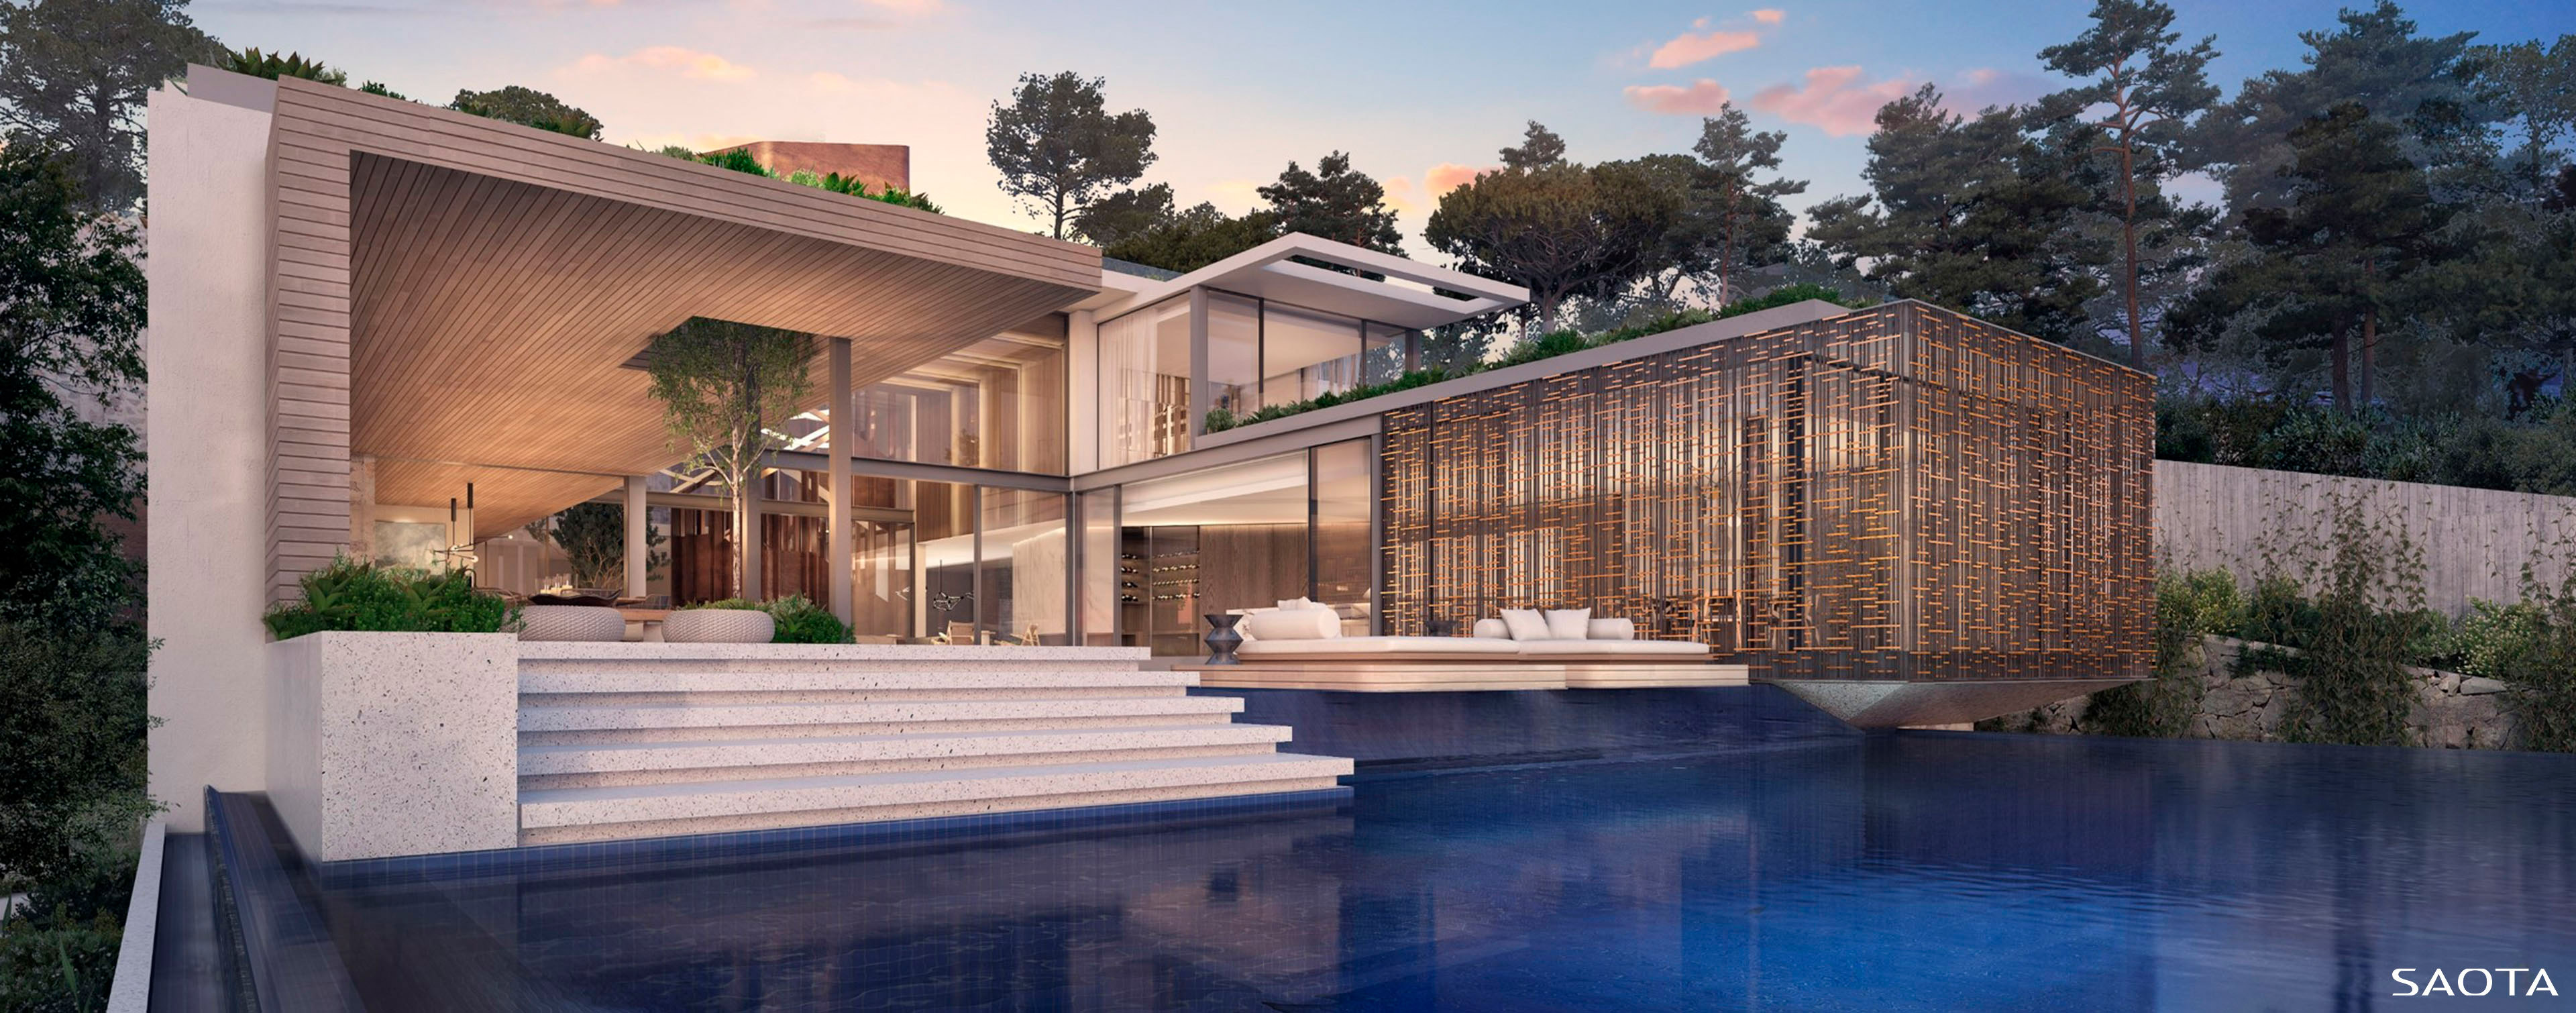 luv studio luxury architects ibiza vistaalegre house IMG 03 - LUV Studio - Architecture et design - Barcelone